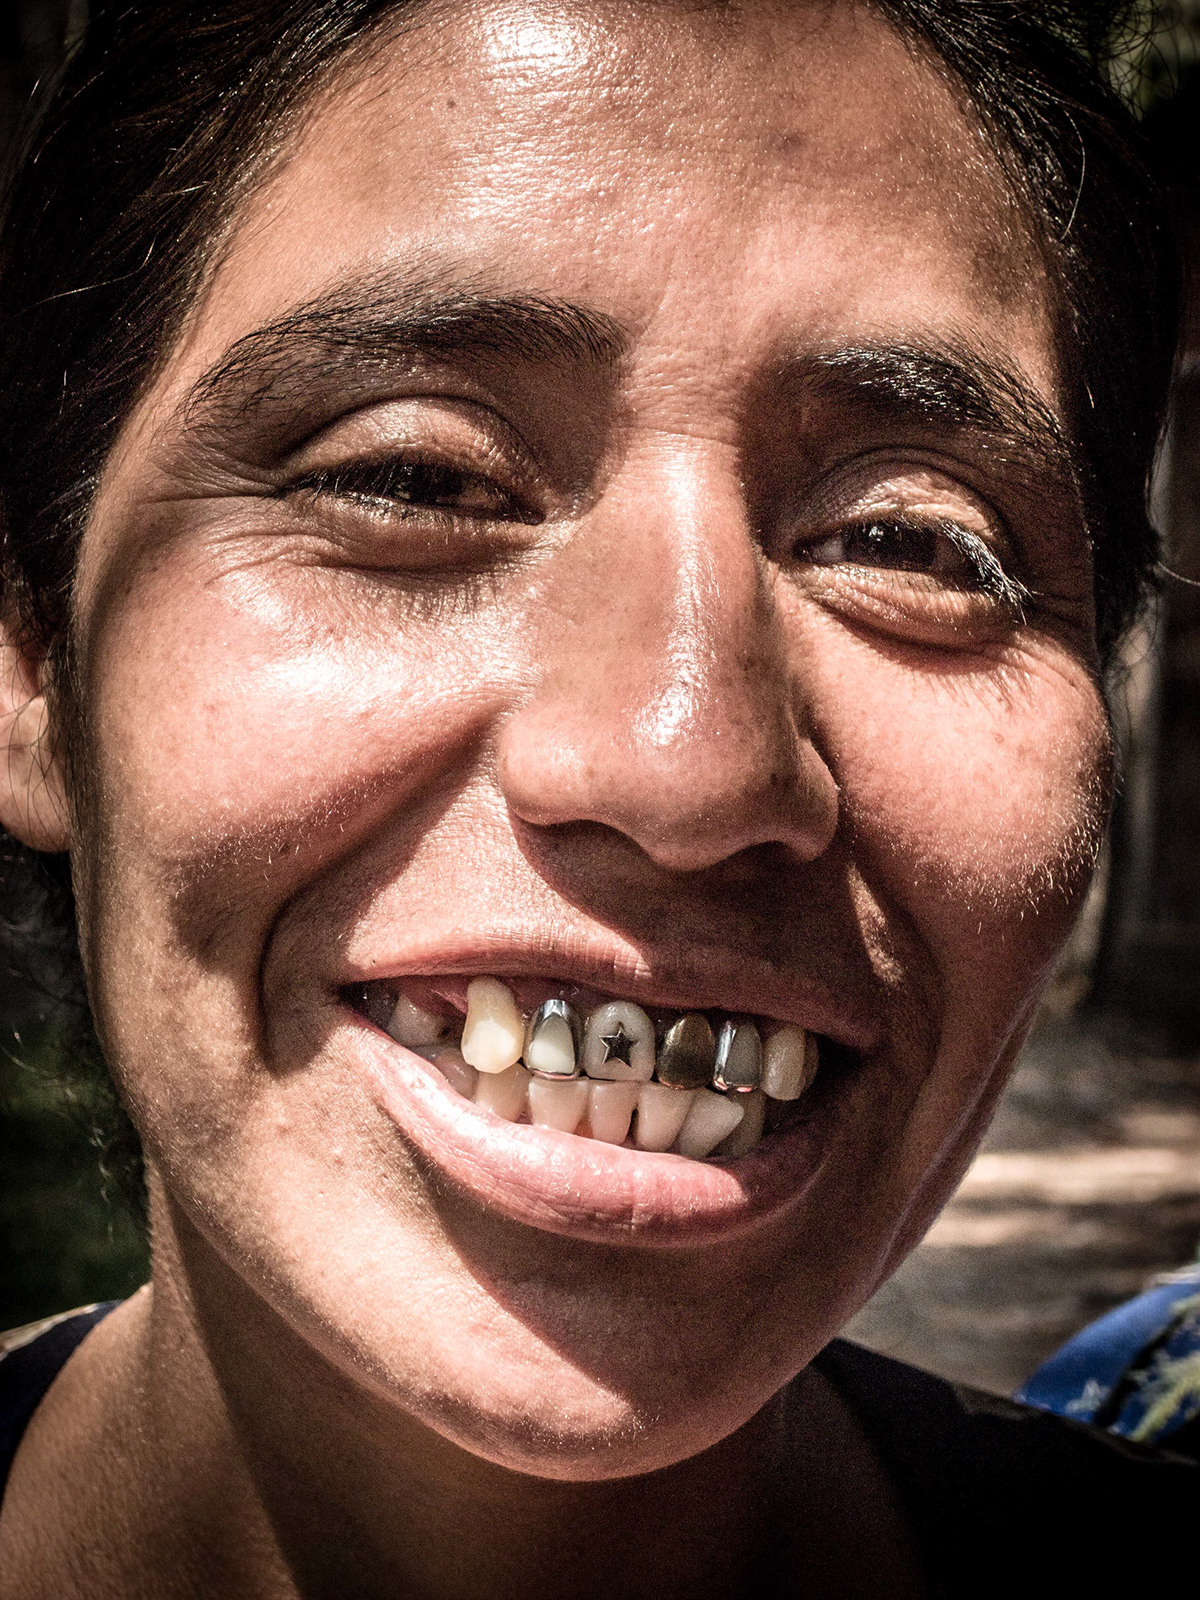 Guatemala  friend amigo Nujani’ Atitlan Reportaje journal photojournal POO pobreza felicidad happiness danielurrutia.wix.com/camera-photo